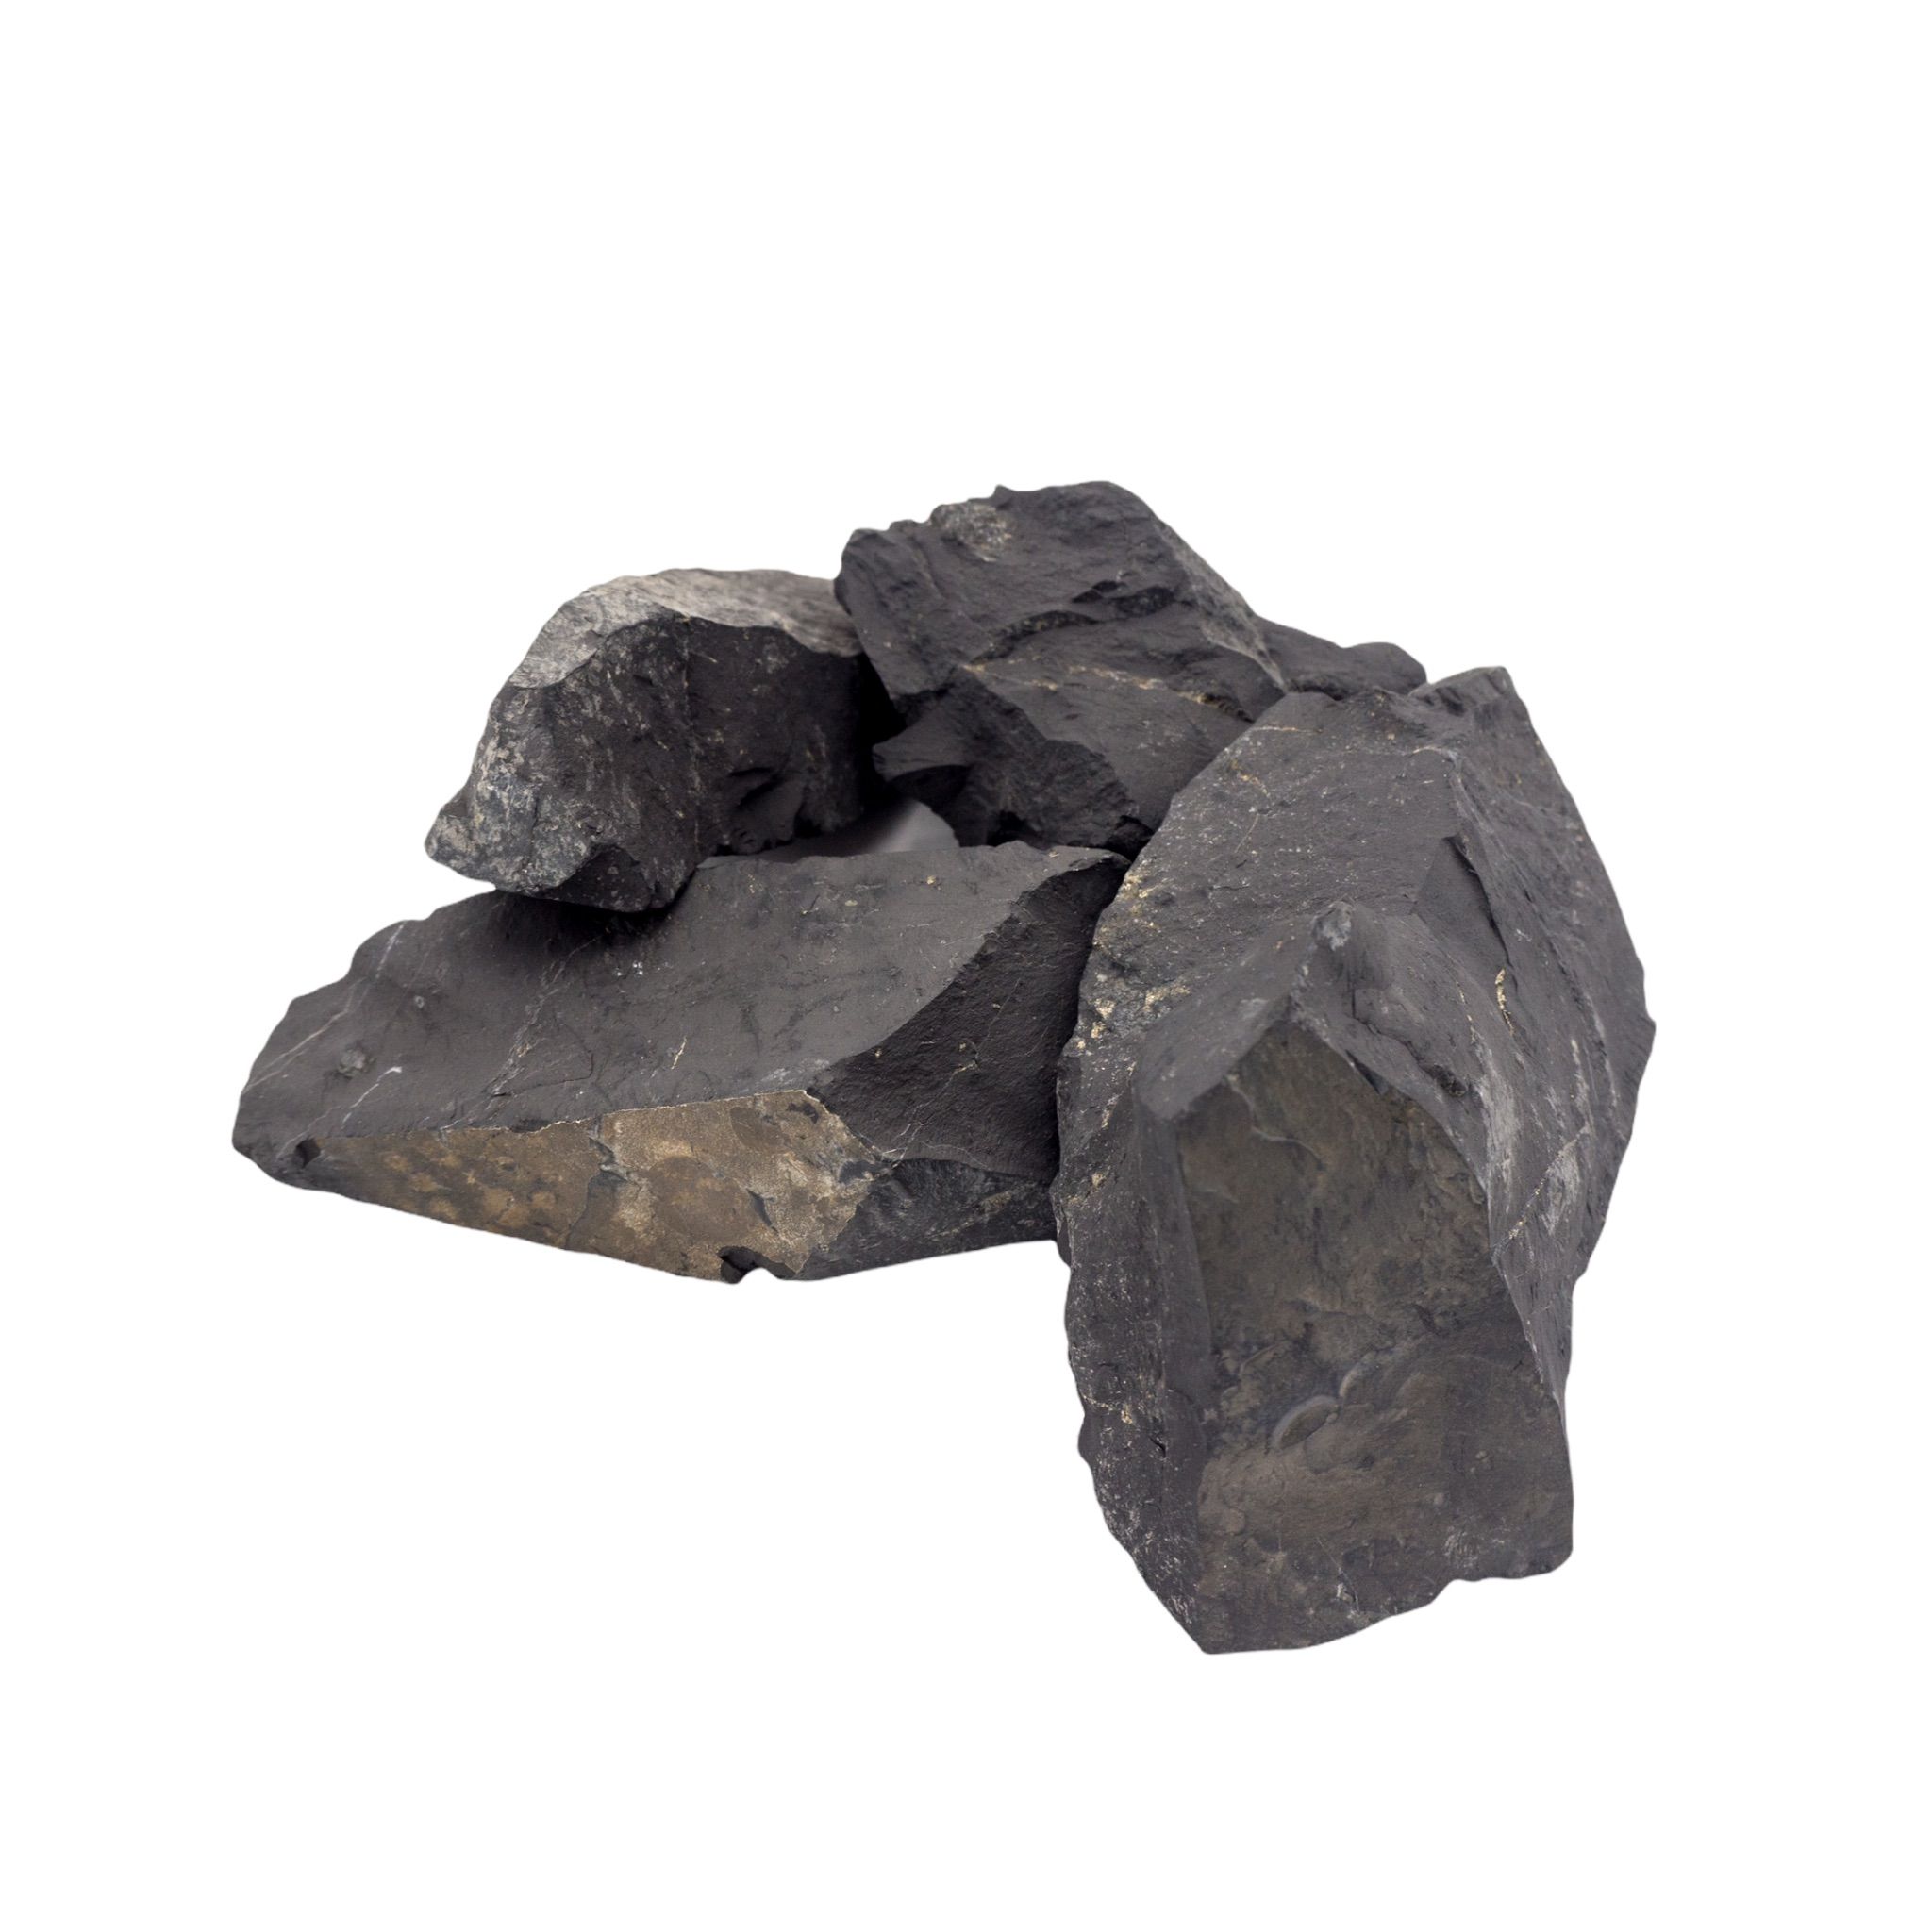 Comprar Shungit shungita piedra rodado en natural sin pulir tamaño medio